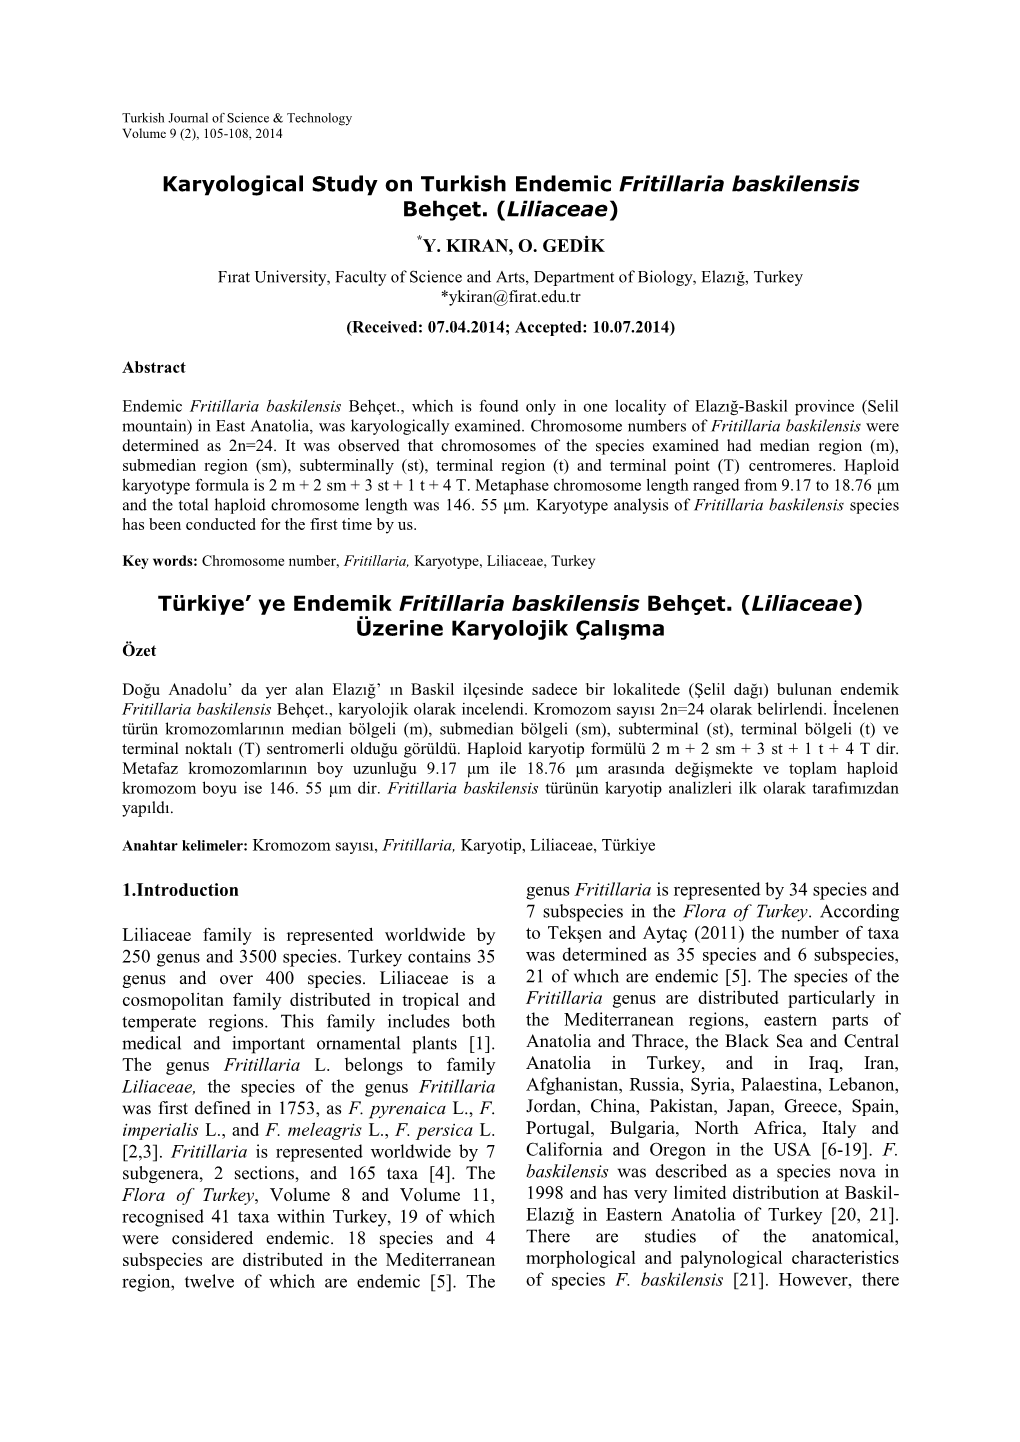 Karyological Study on Turkish Endemic Fritillaria Baskilensis Behçet. (Liliaceae)